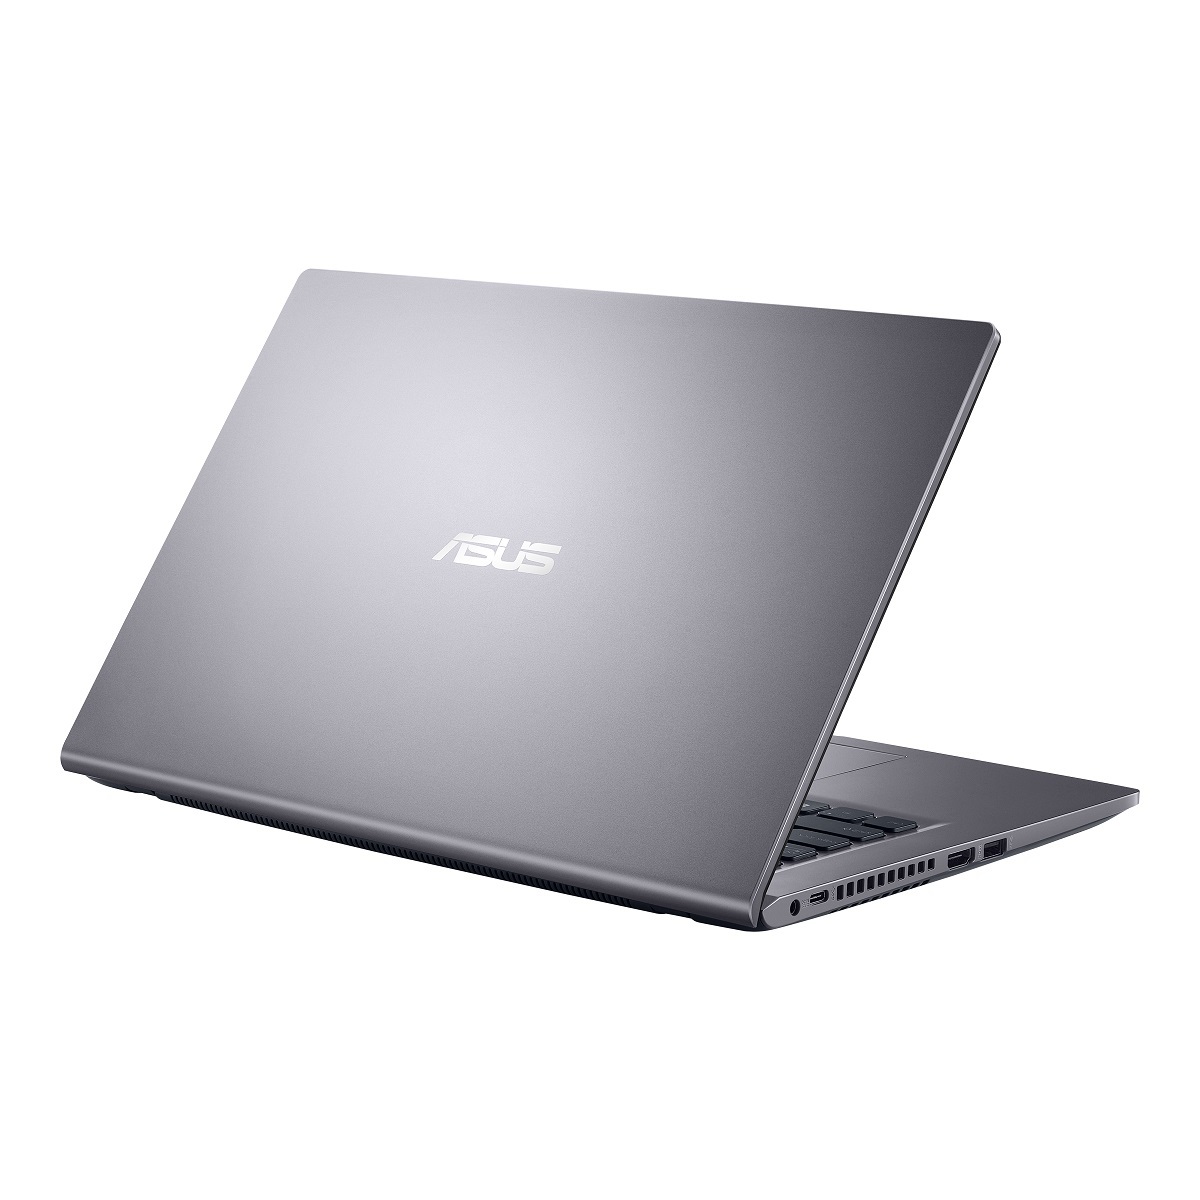 Asus Notebook M415DA-EB501T AMD R5 14" Win10 Grey